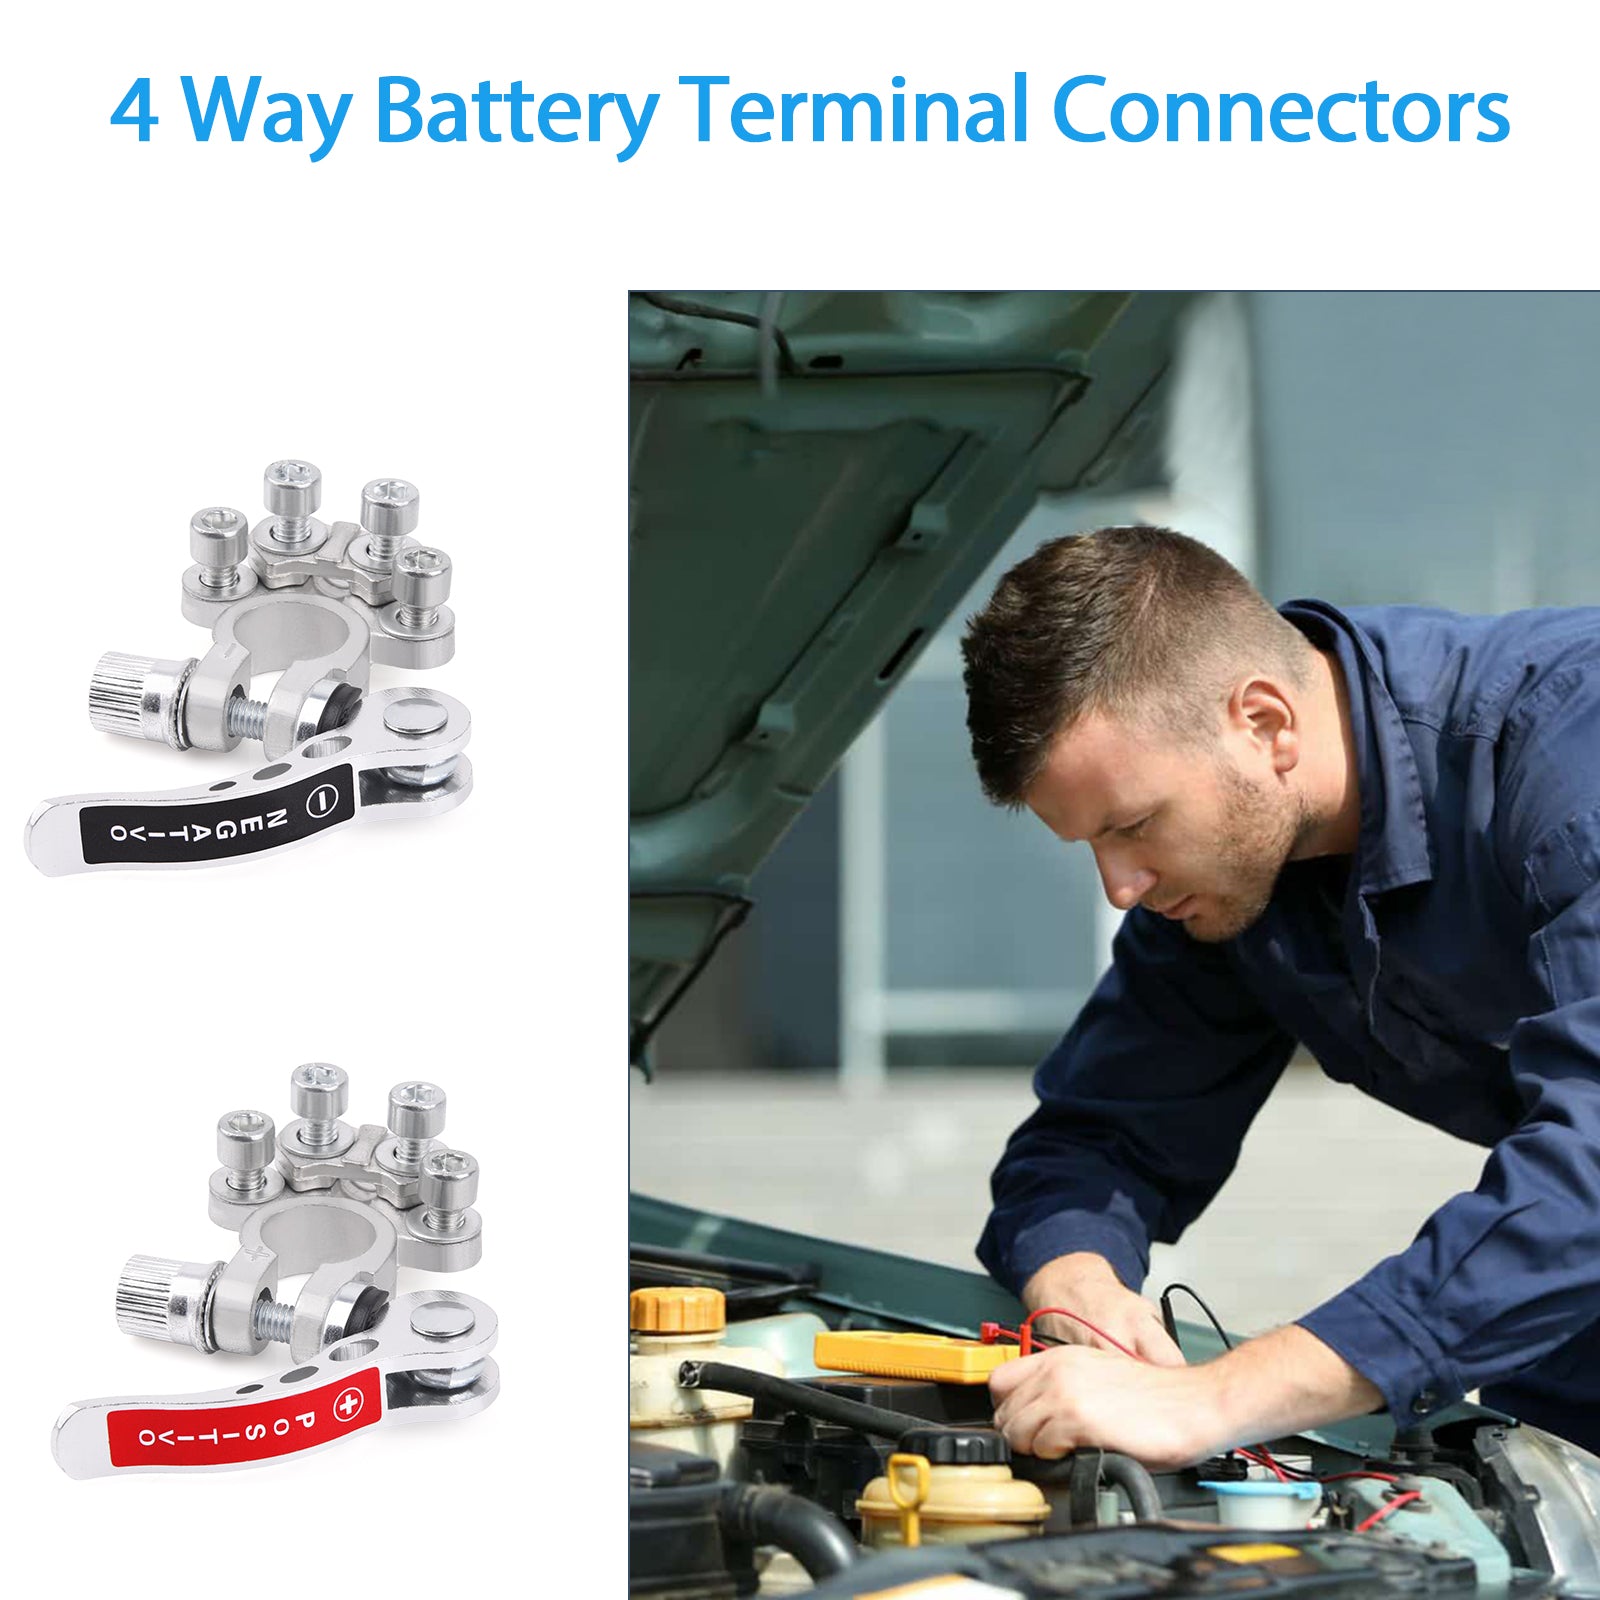 2 Piece Battery Terminal Connectors, 4 Way Quick Release